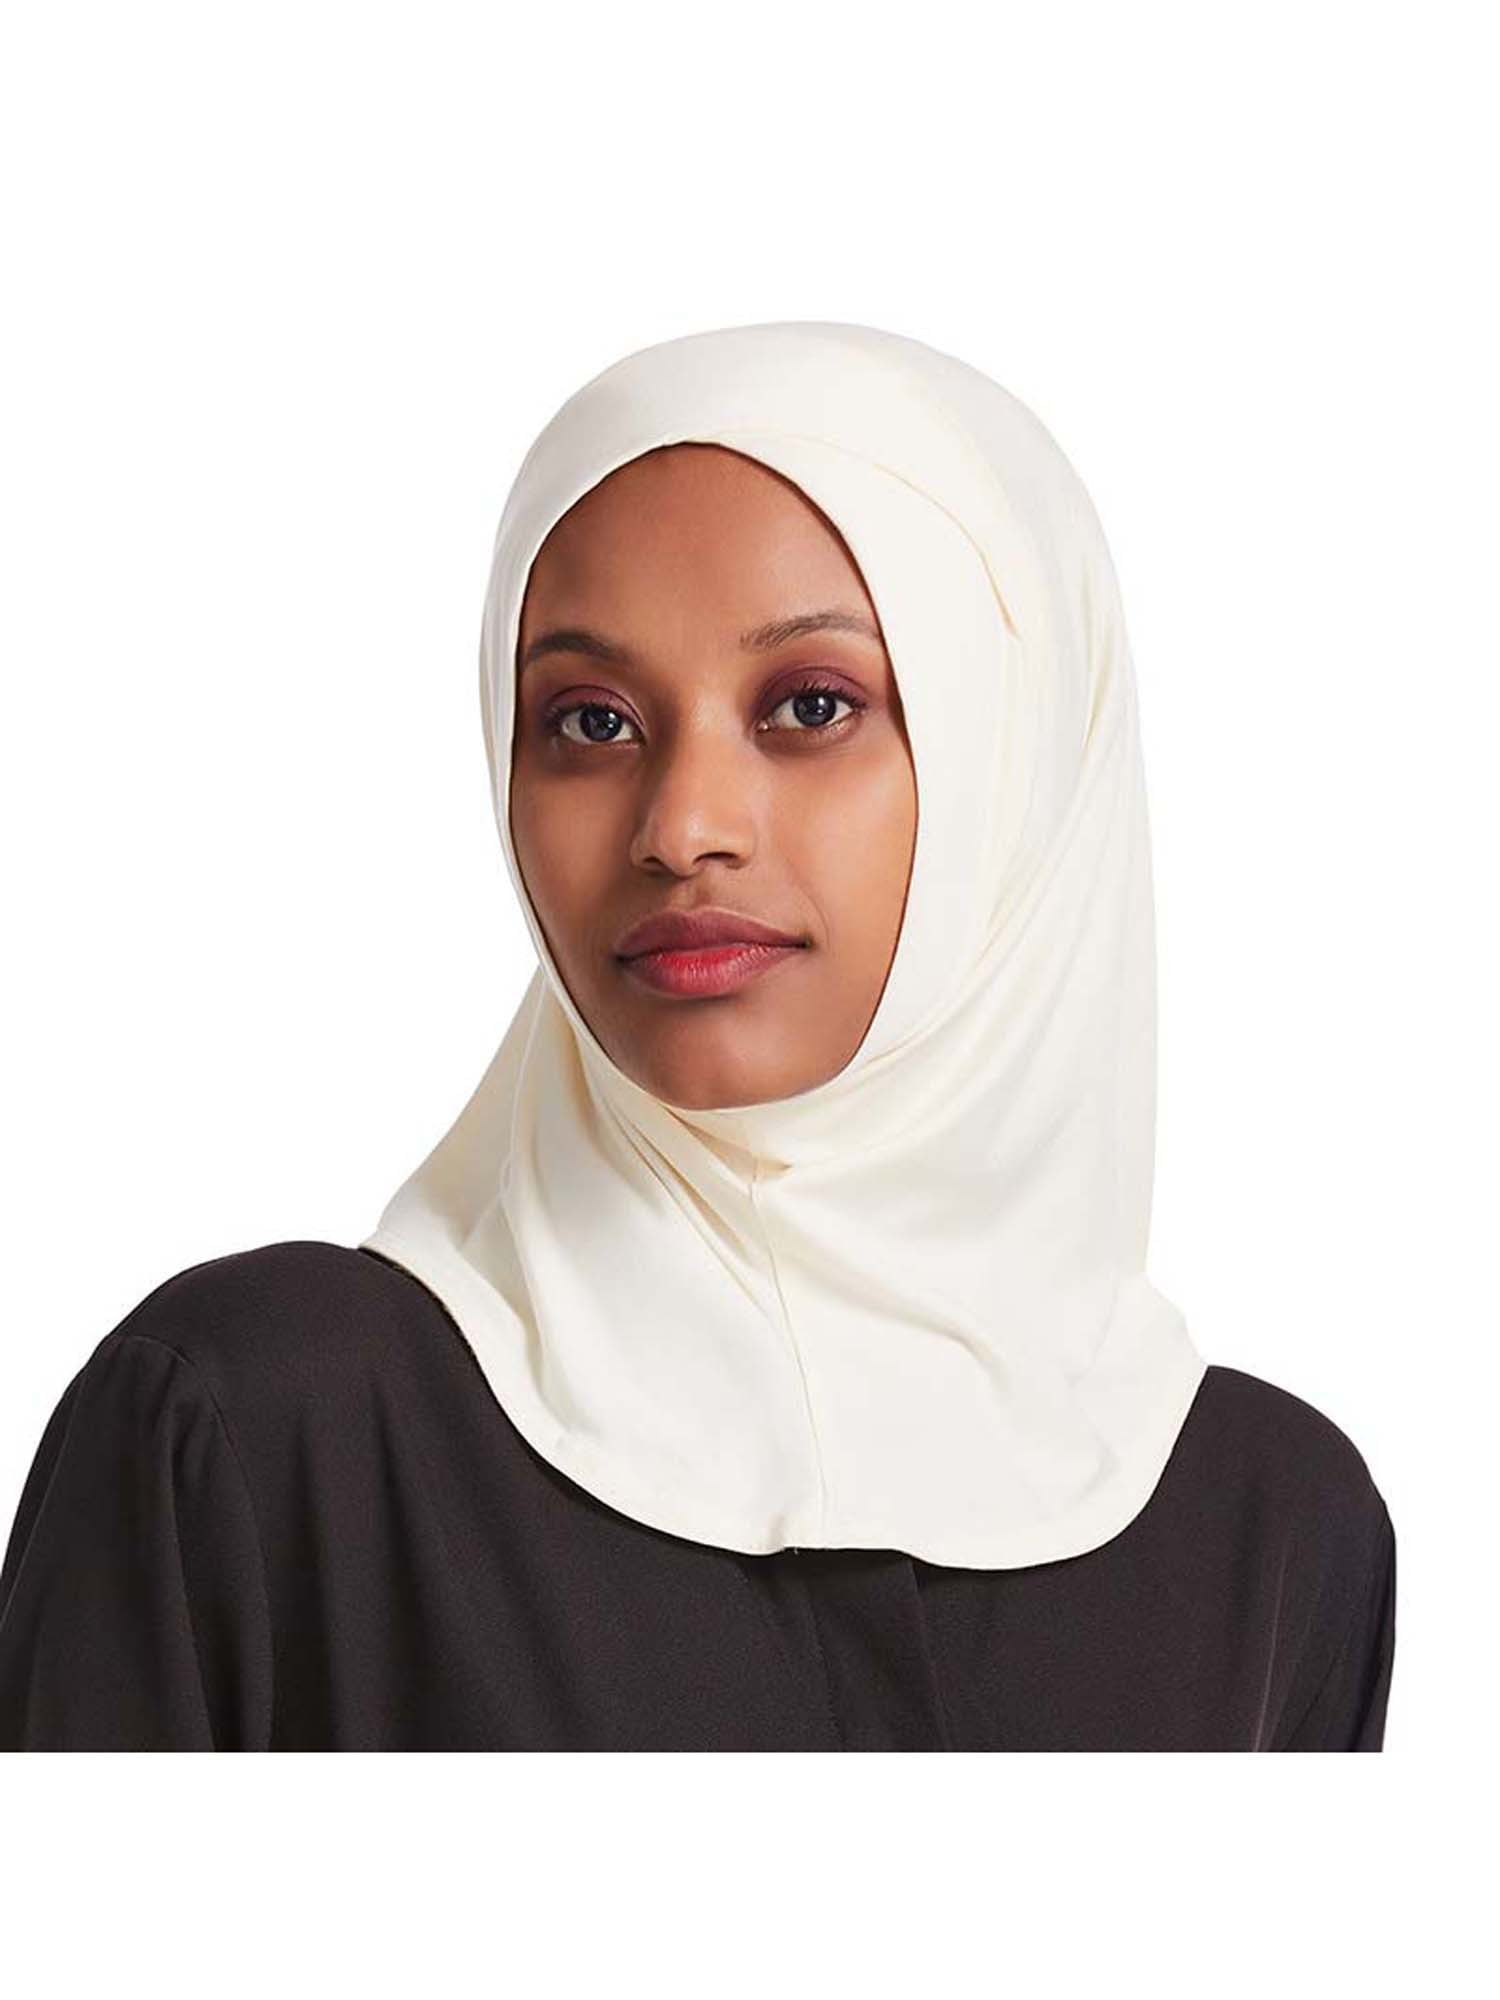 Men's Muslim Hijab Caps Turban Islamic Keffiyeh Arab Scarf Chemo Headwear Stripe 